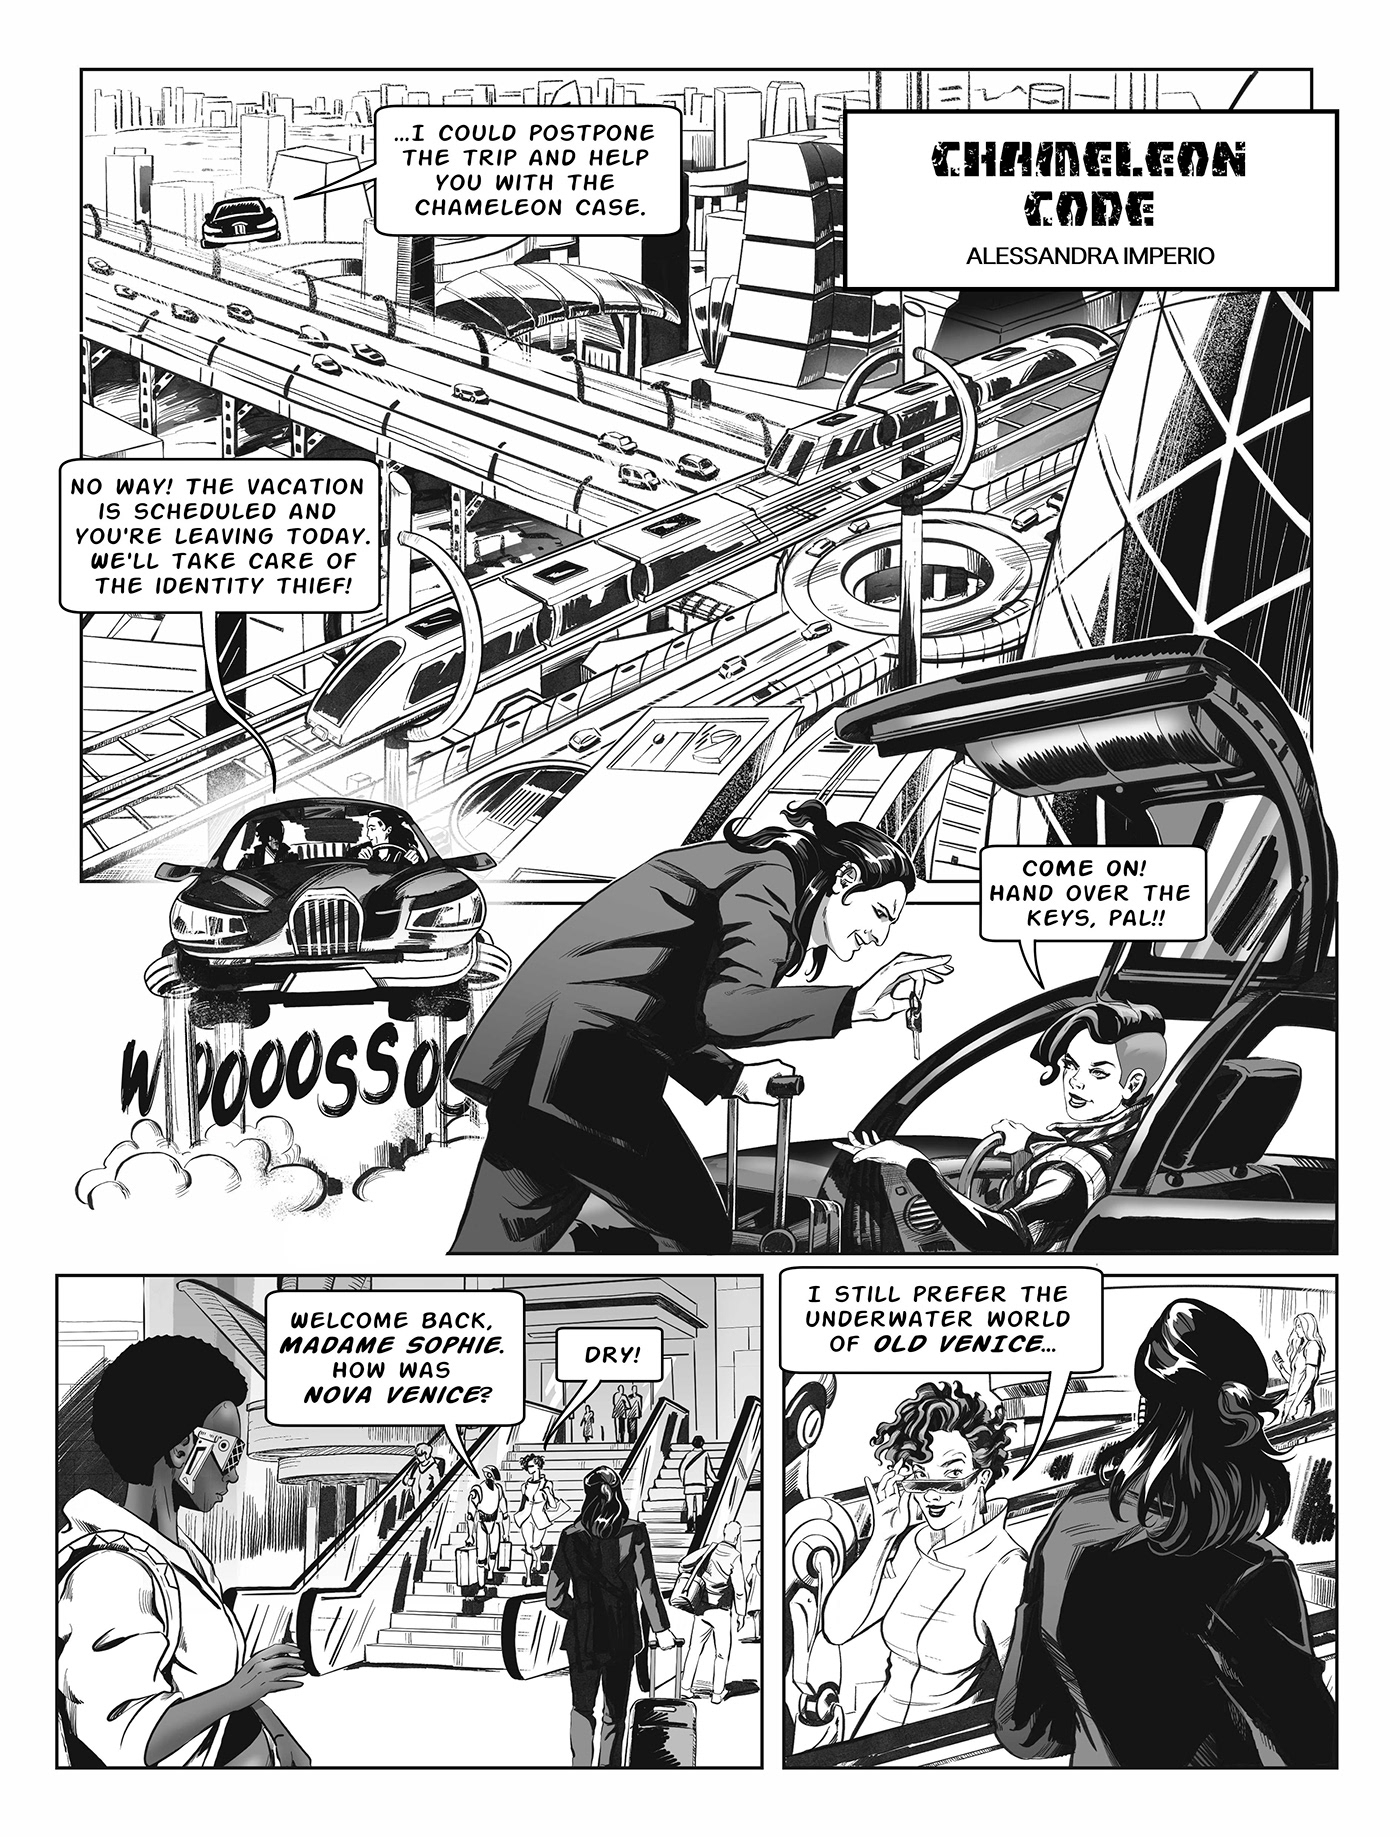 personal project comicbookart comicbookartist Digitalartist dystopianfuture floodedvenice FuturisticCity